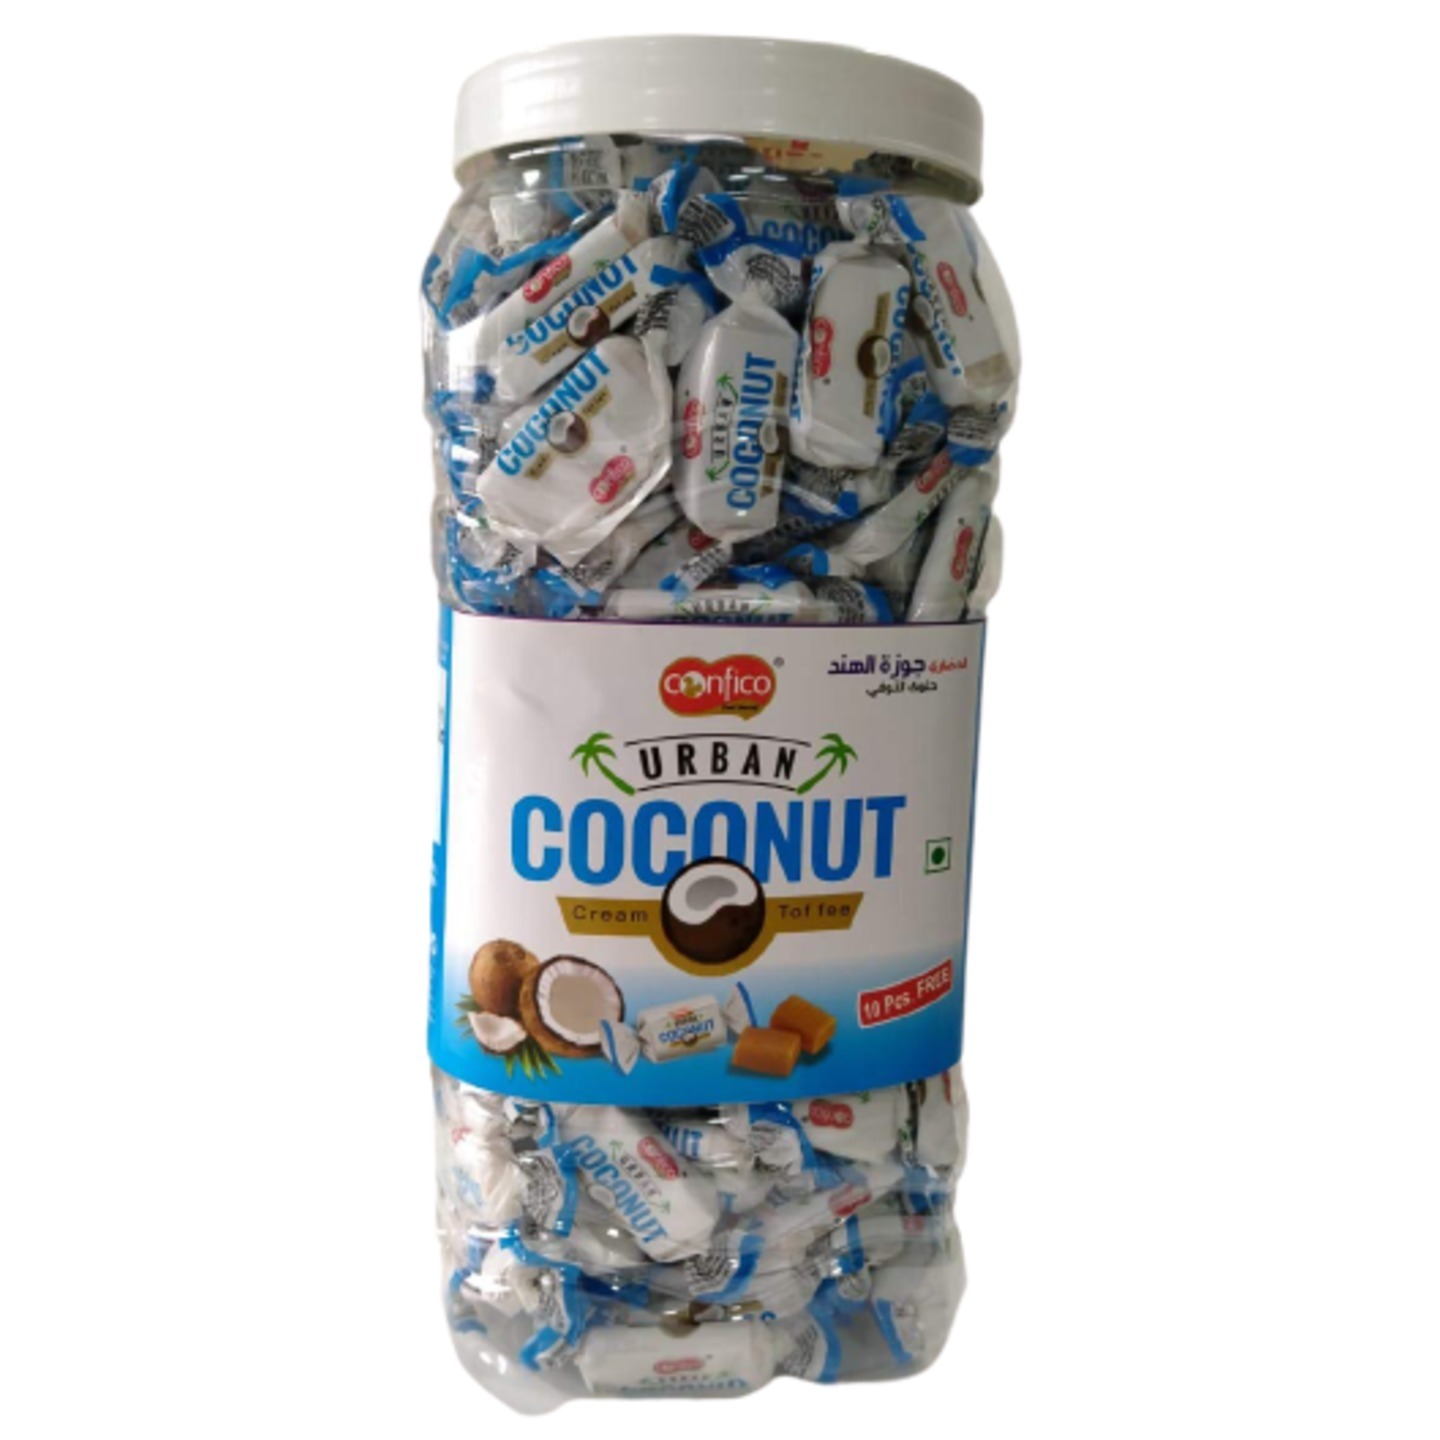 Confico Urban Coconut Cream Toffee Mrp 240